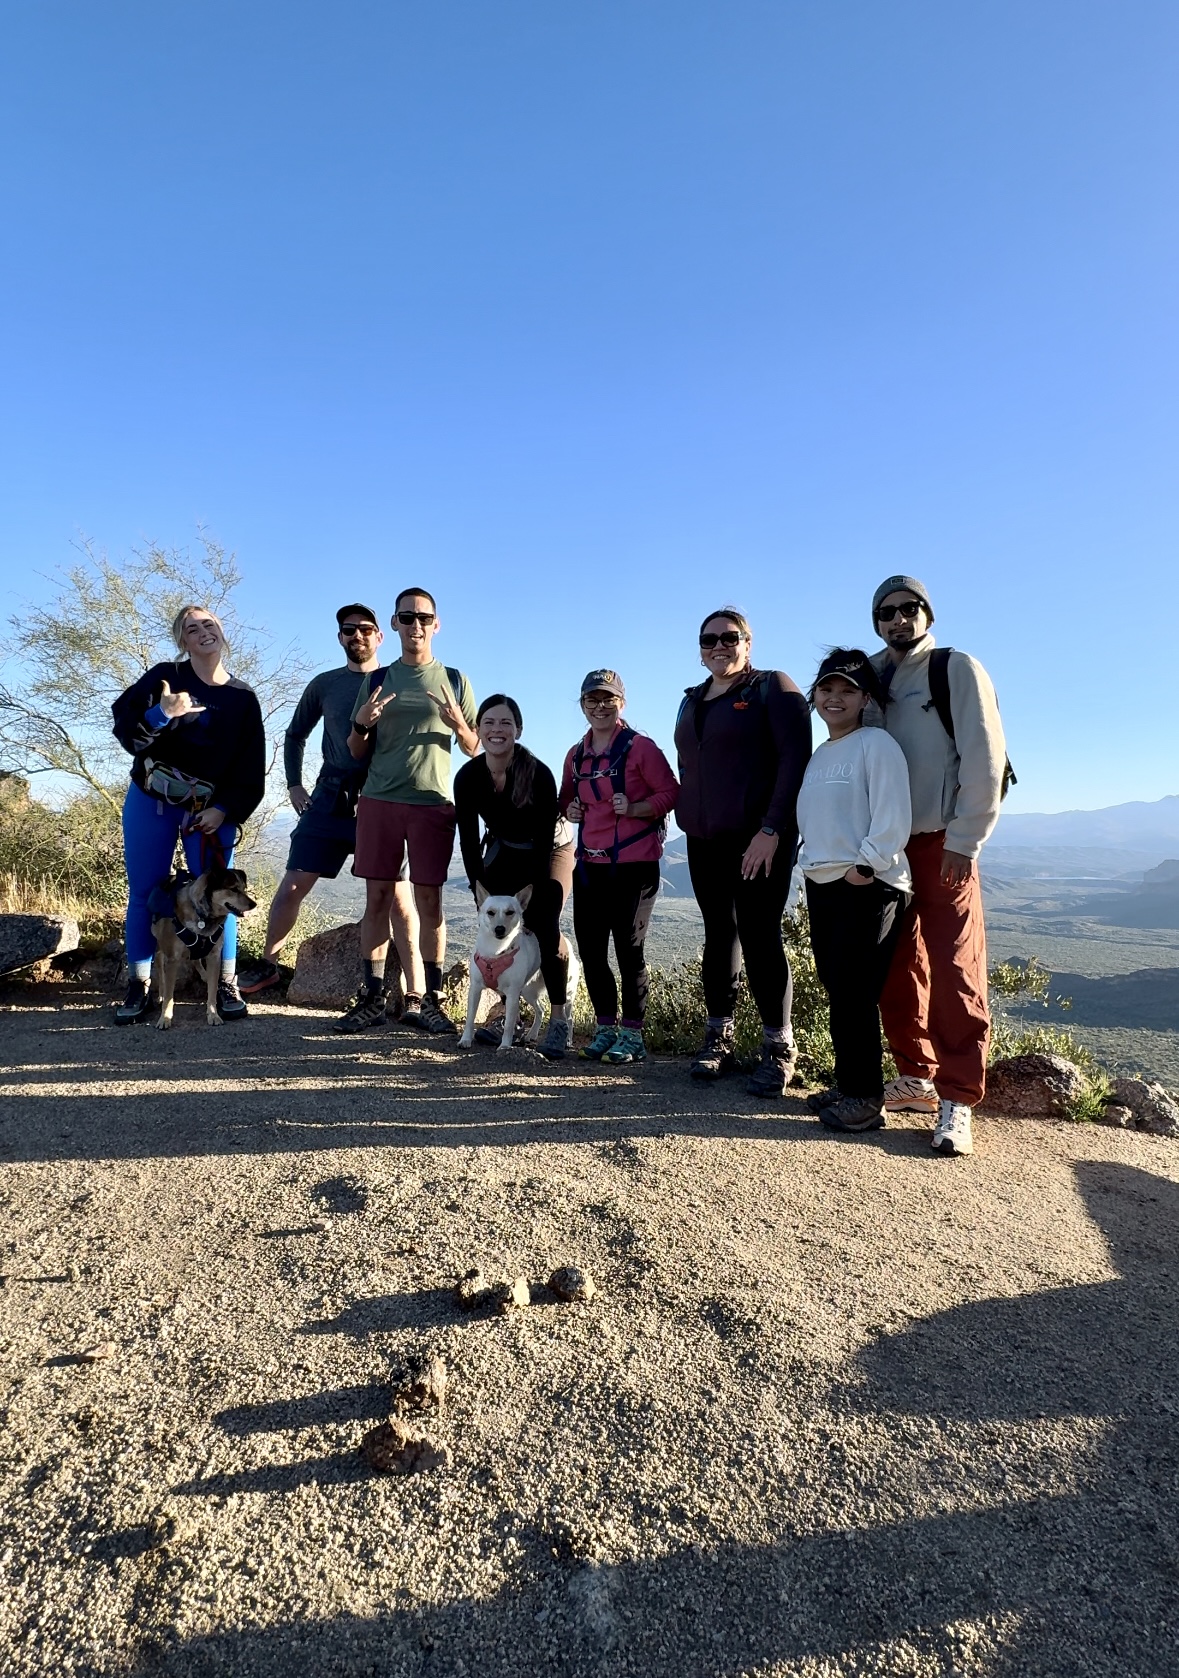 group hike in phoenix arizona area